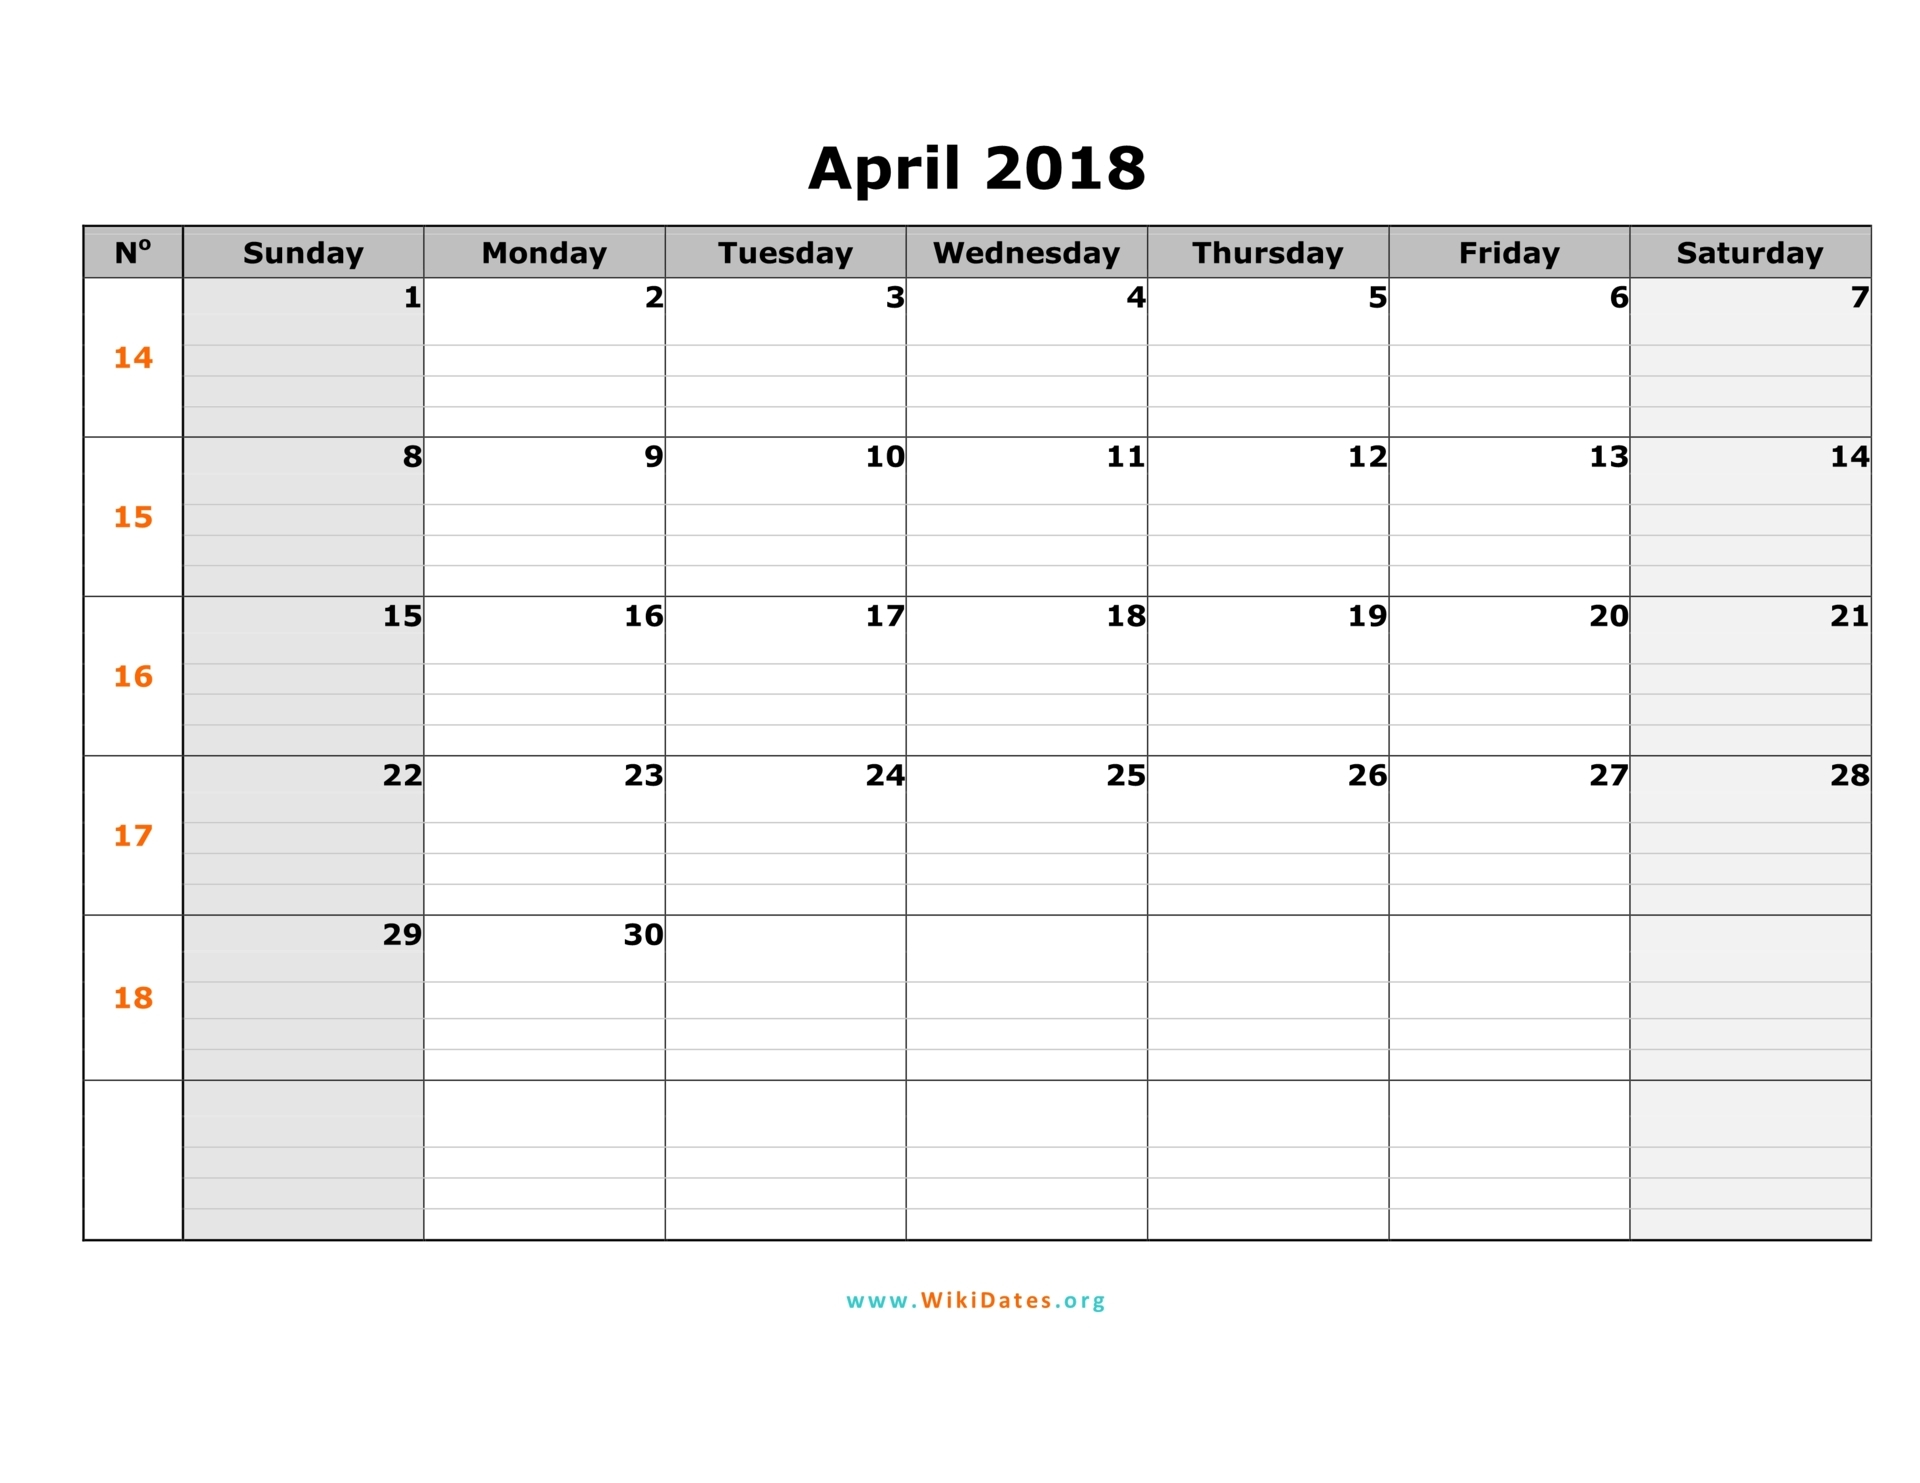 april-2018-calendar-wikidates